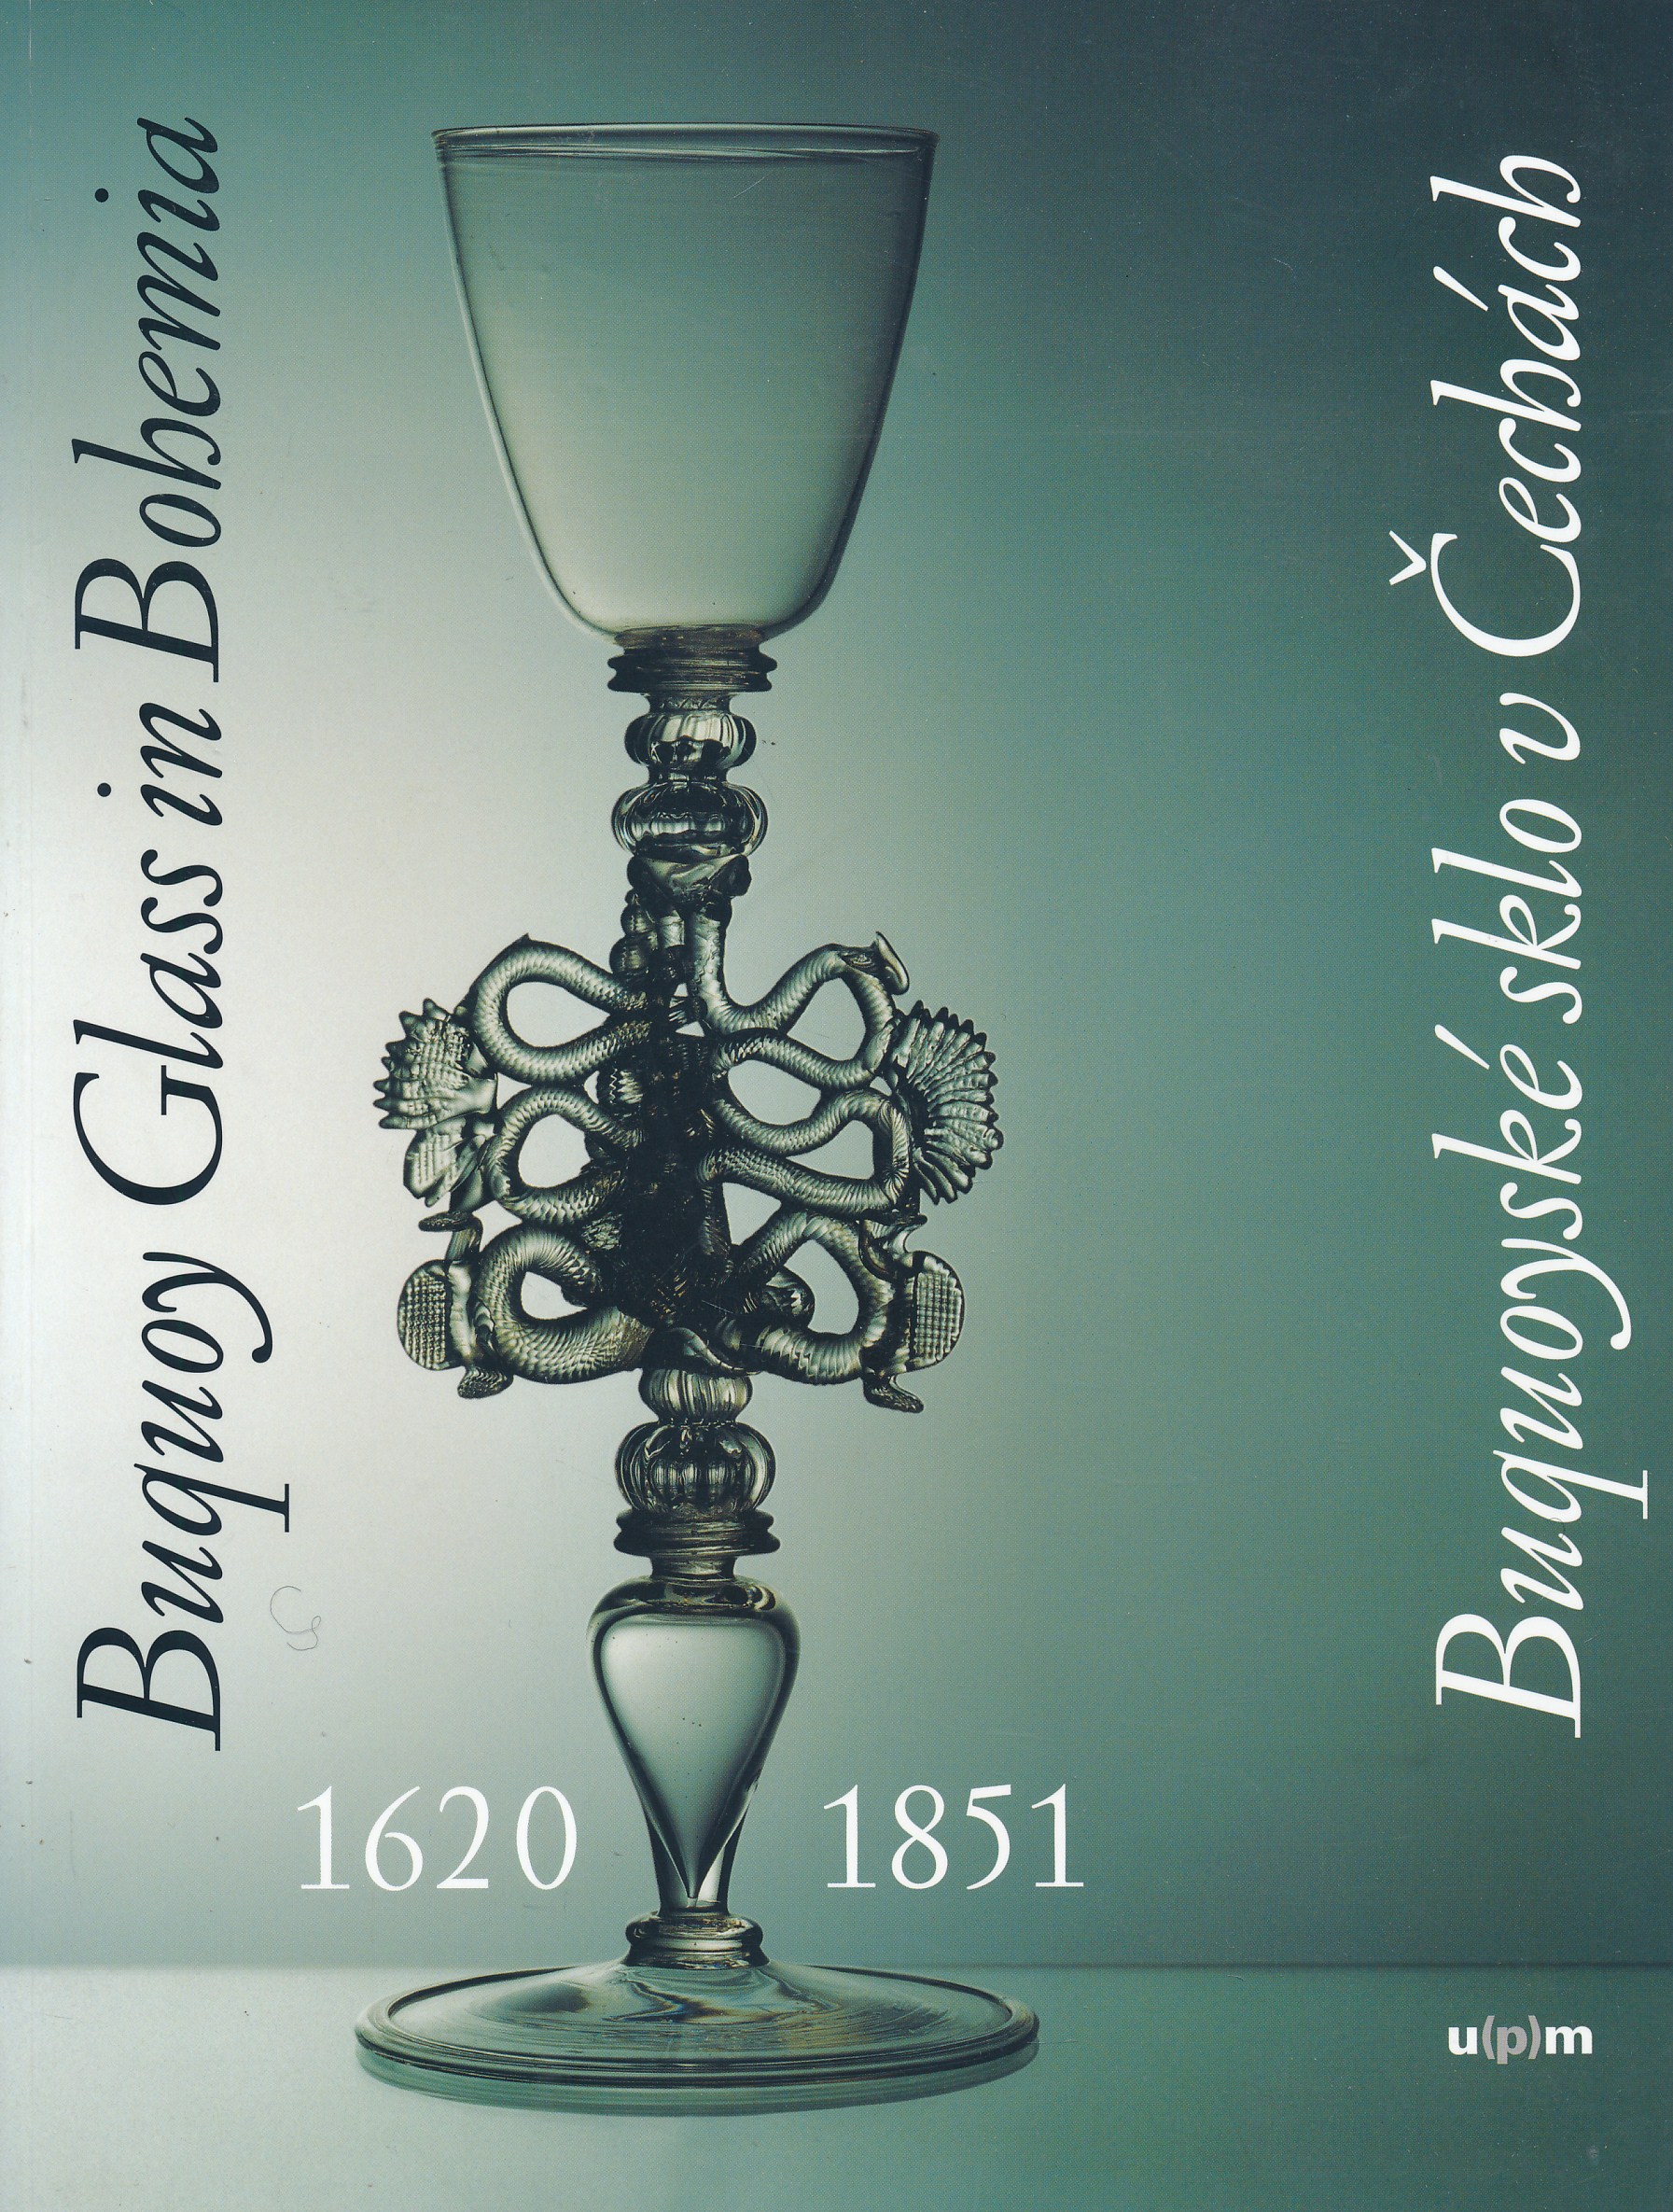 Buquoysk Sklo v Cech. Buquoy Glass in Bohemia 1620-1851